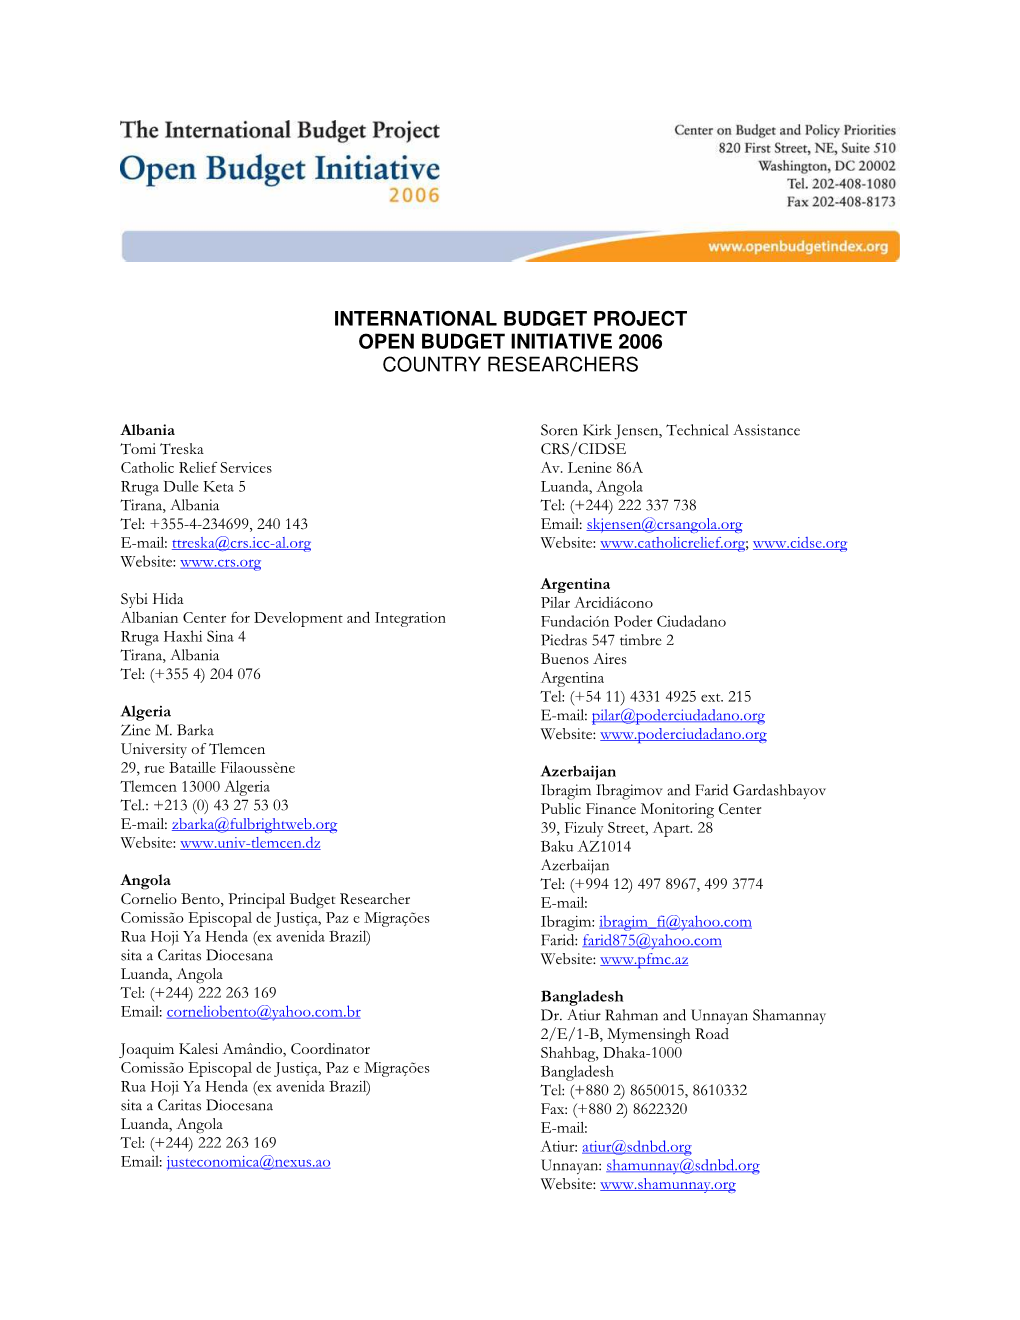 Open Budget Survey 2006 Researcher Contact List